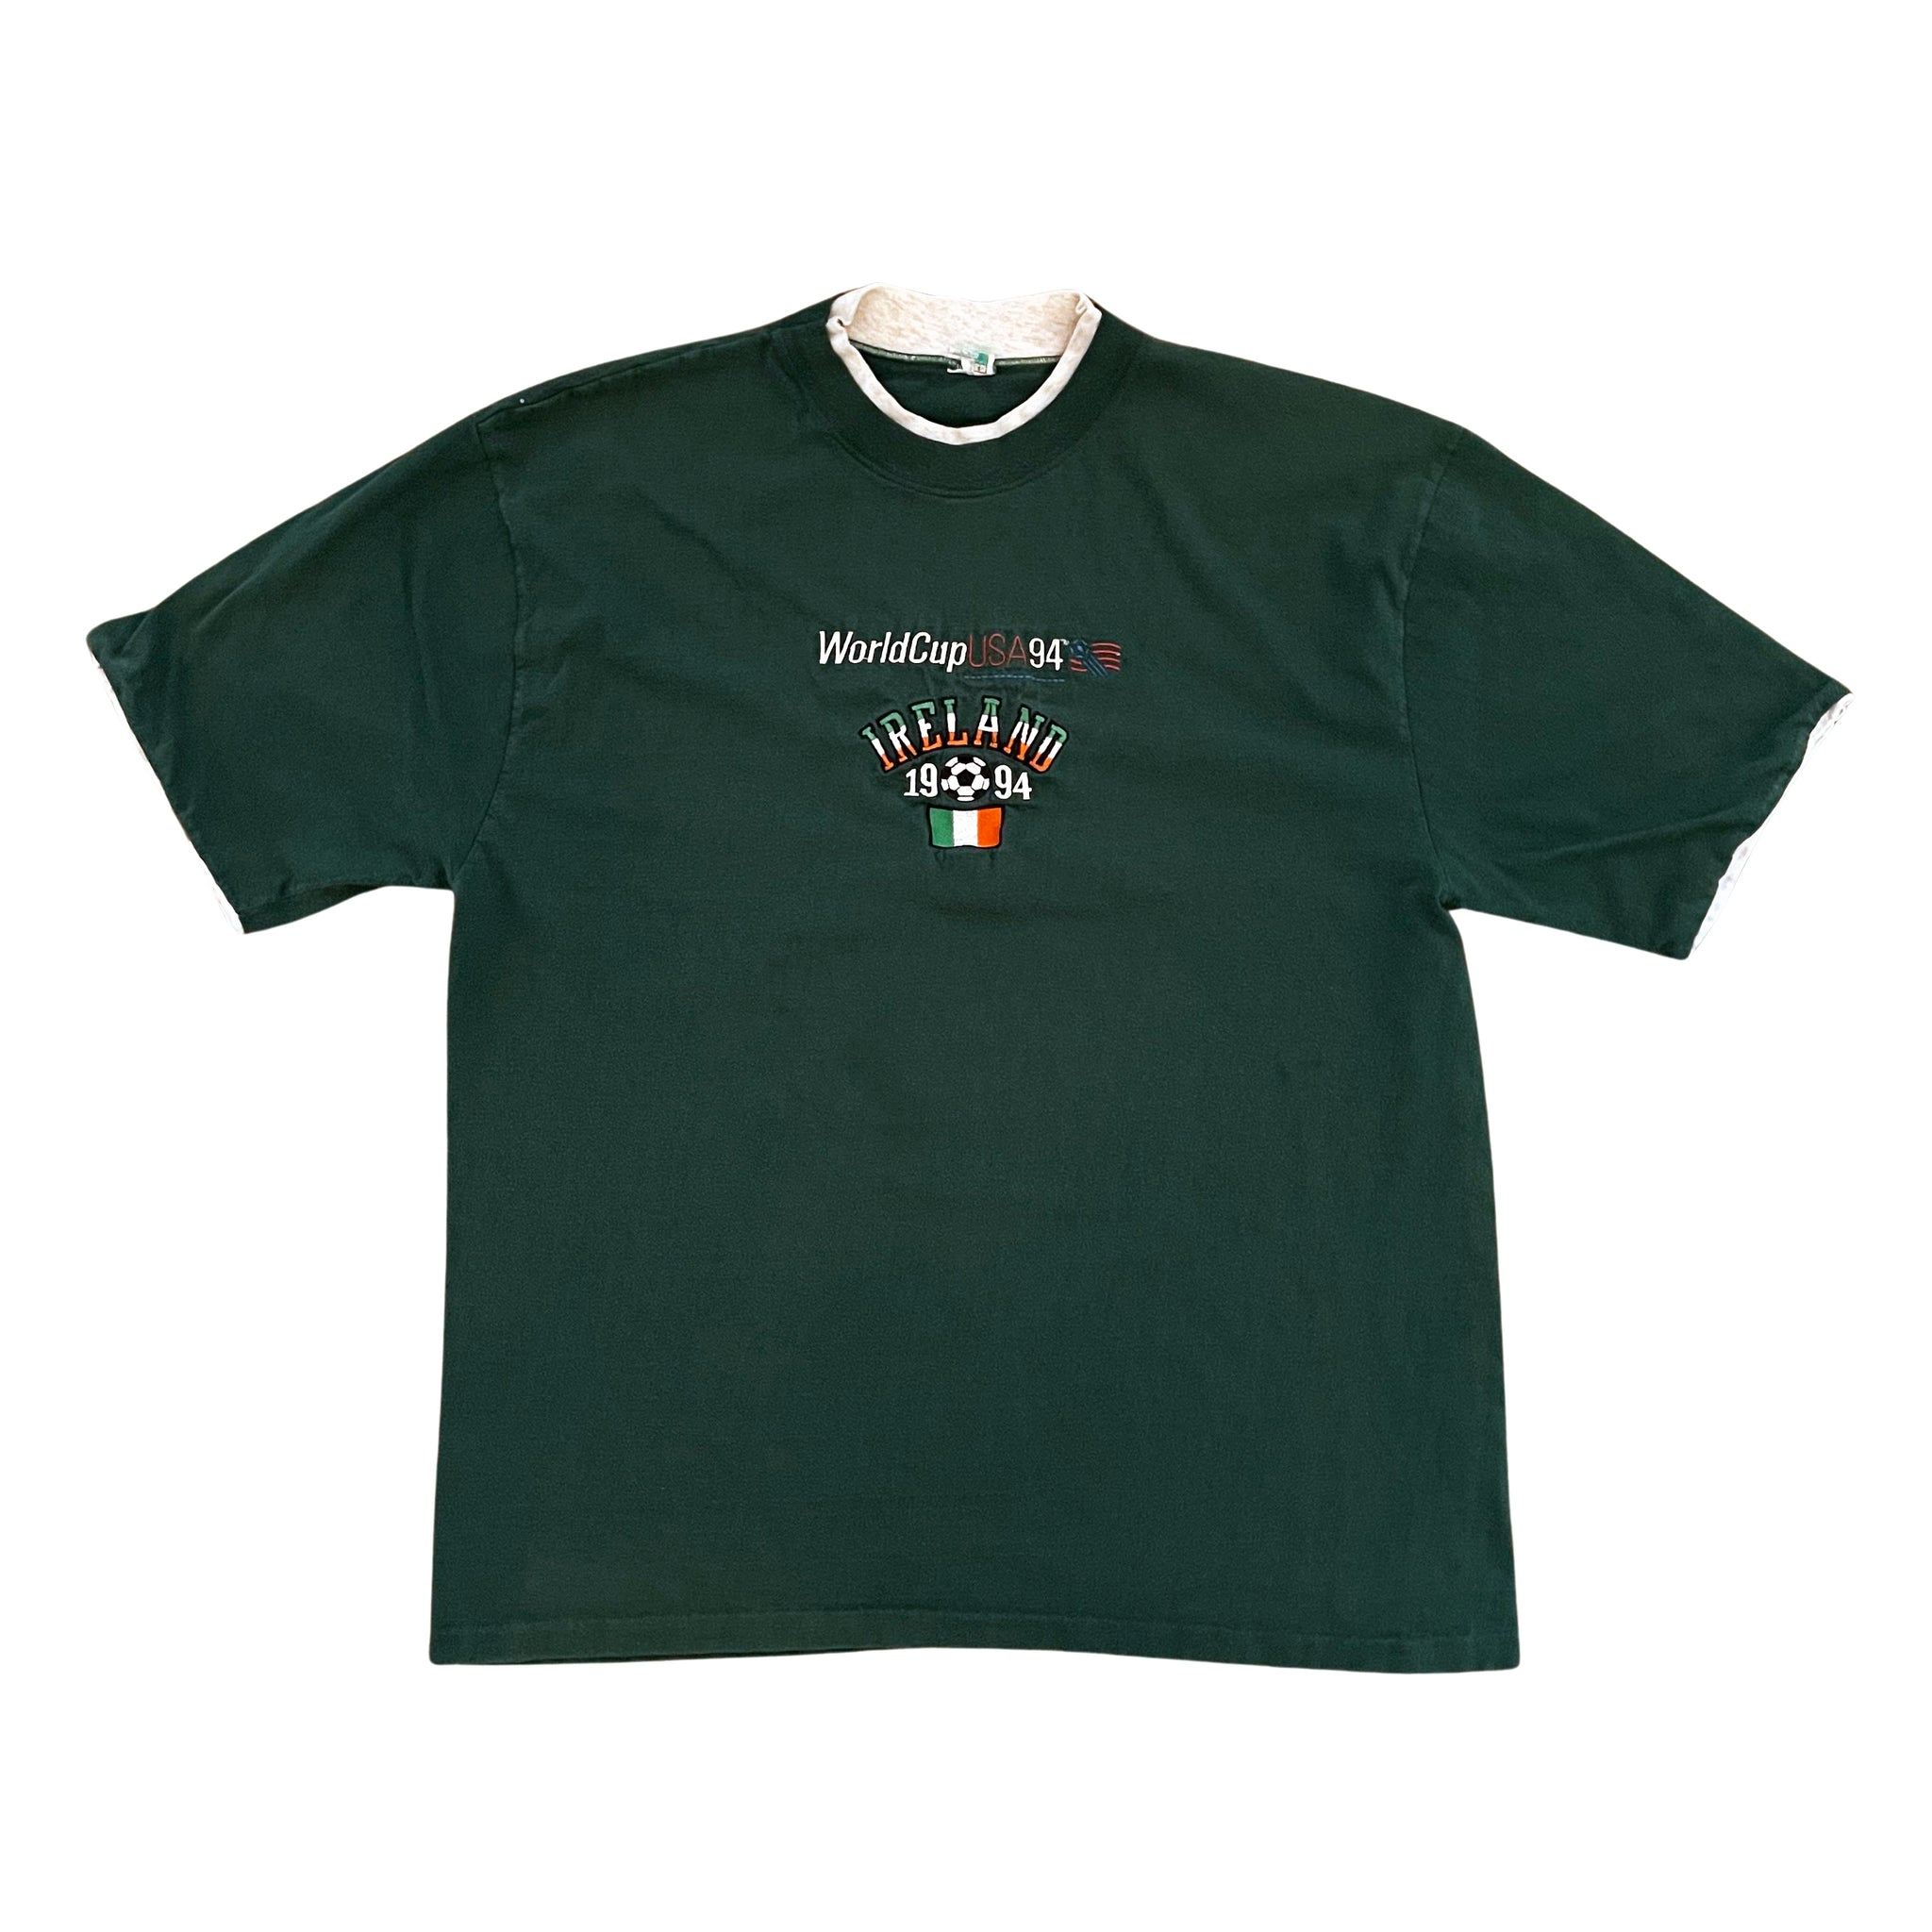 1994 WC Ireland Shirt - XL